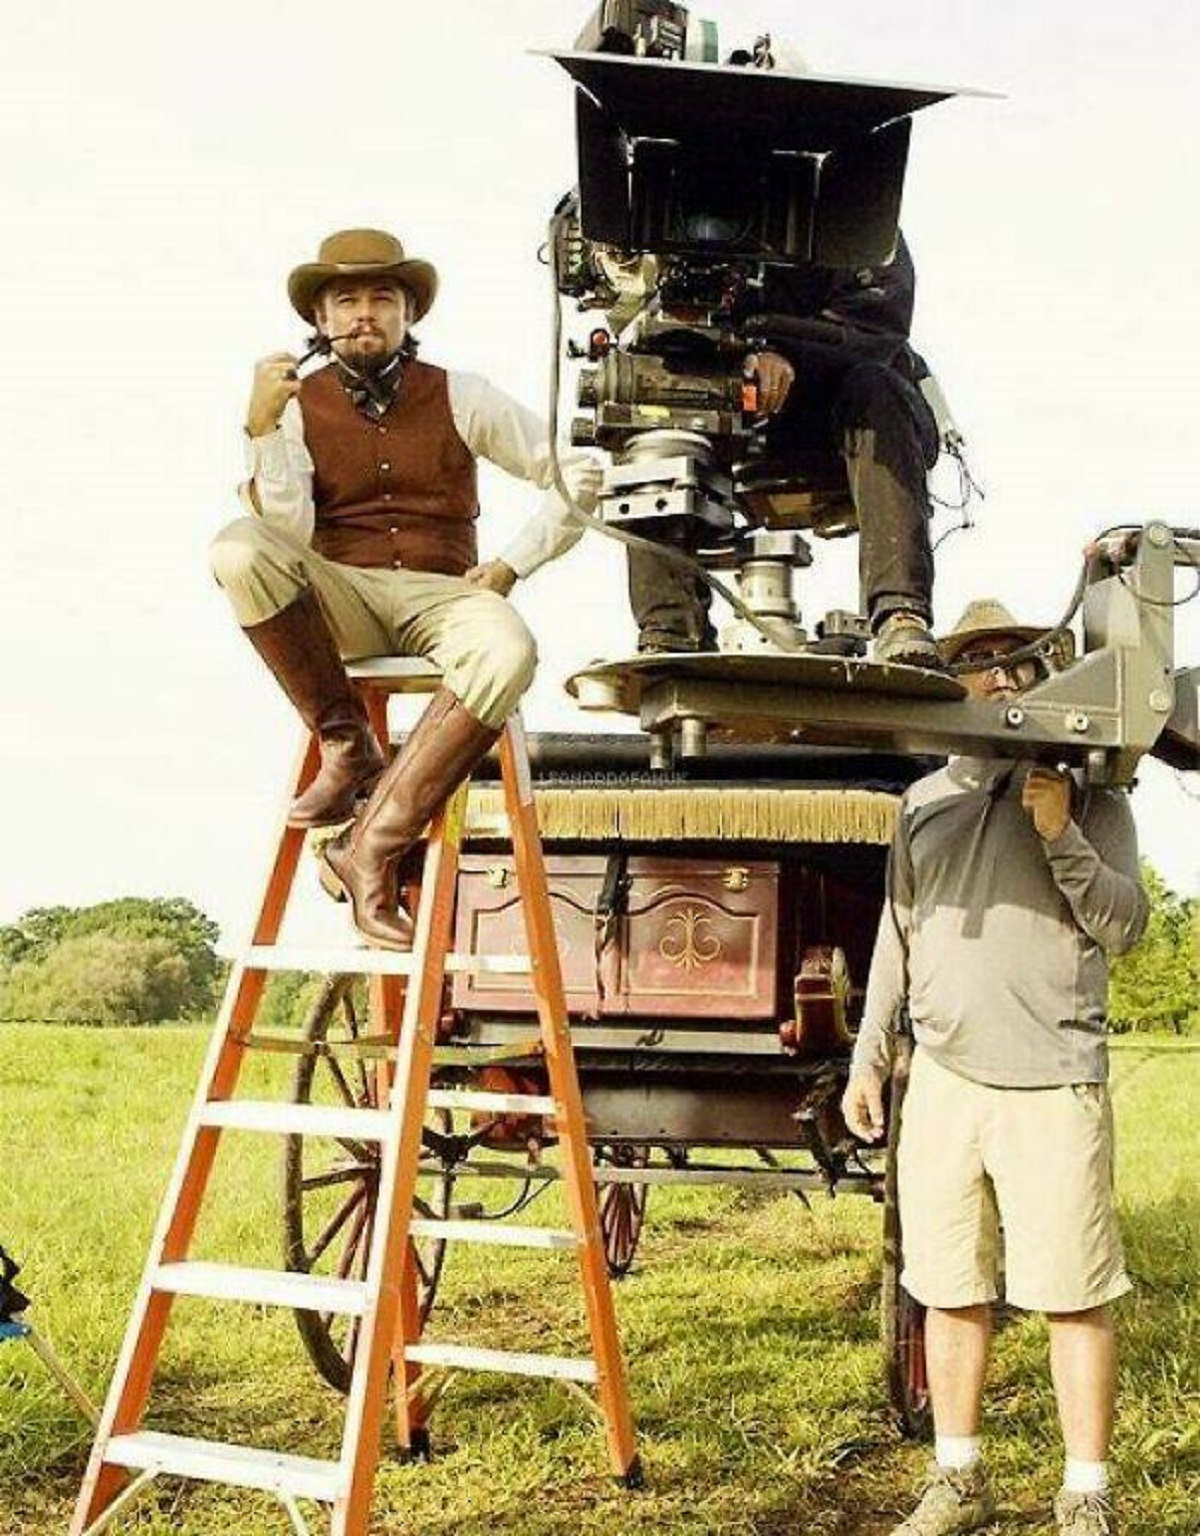 "Leonardo Dicaprio On The Set Of Django Unchained"